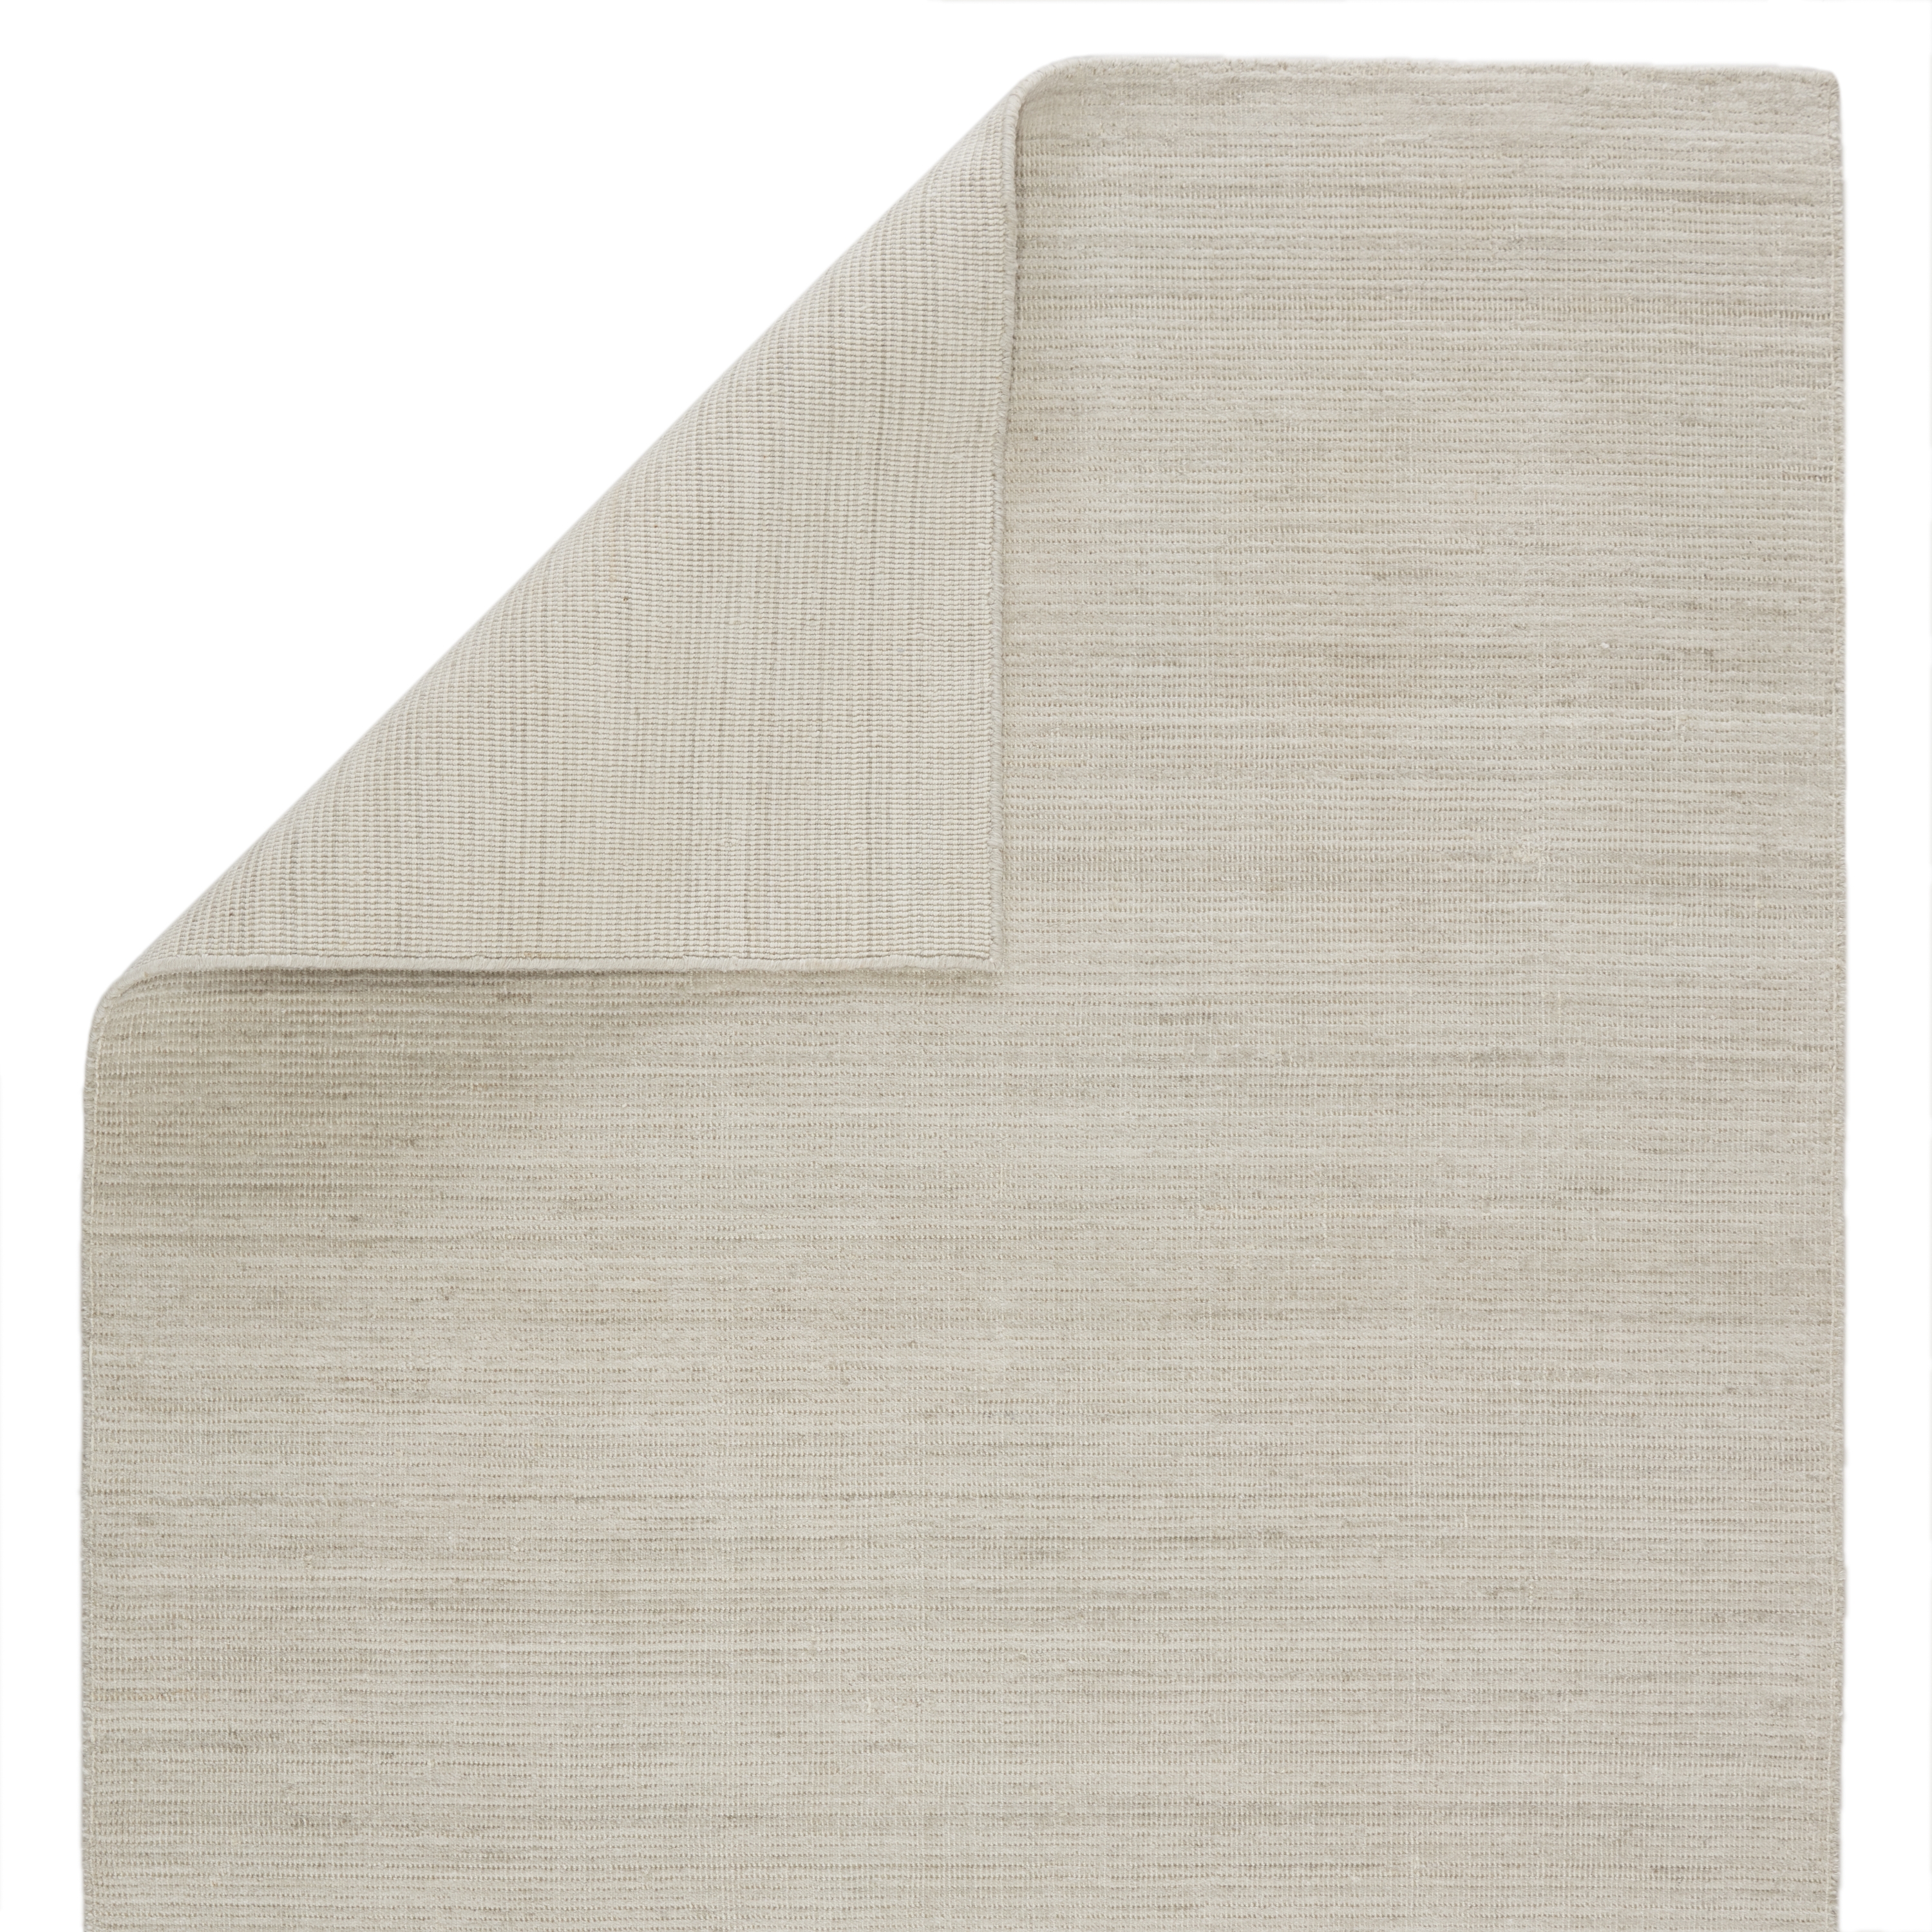 Danan Handmade Solid Ivory/ Light Gray Area Rug (5'X8') - Image 2